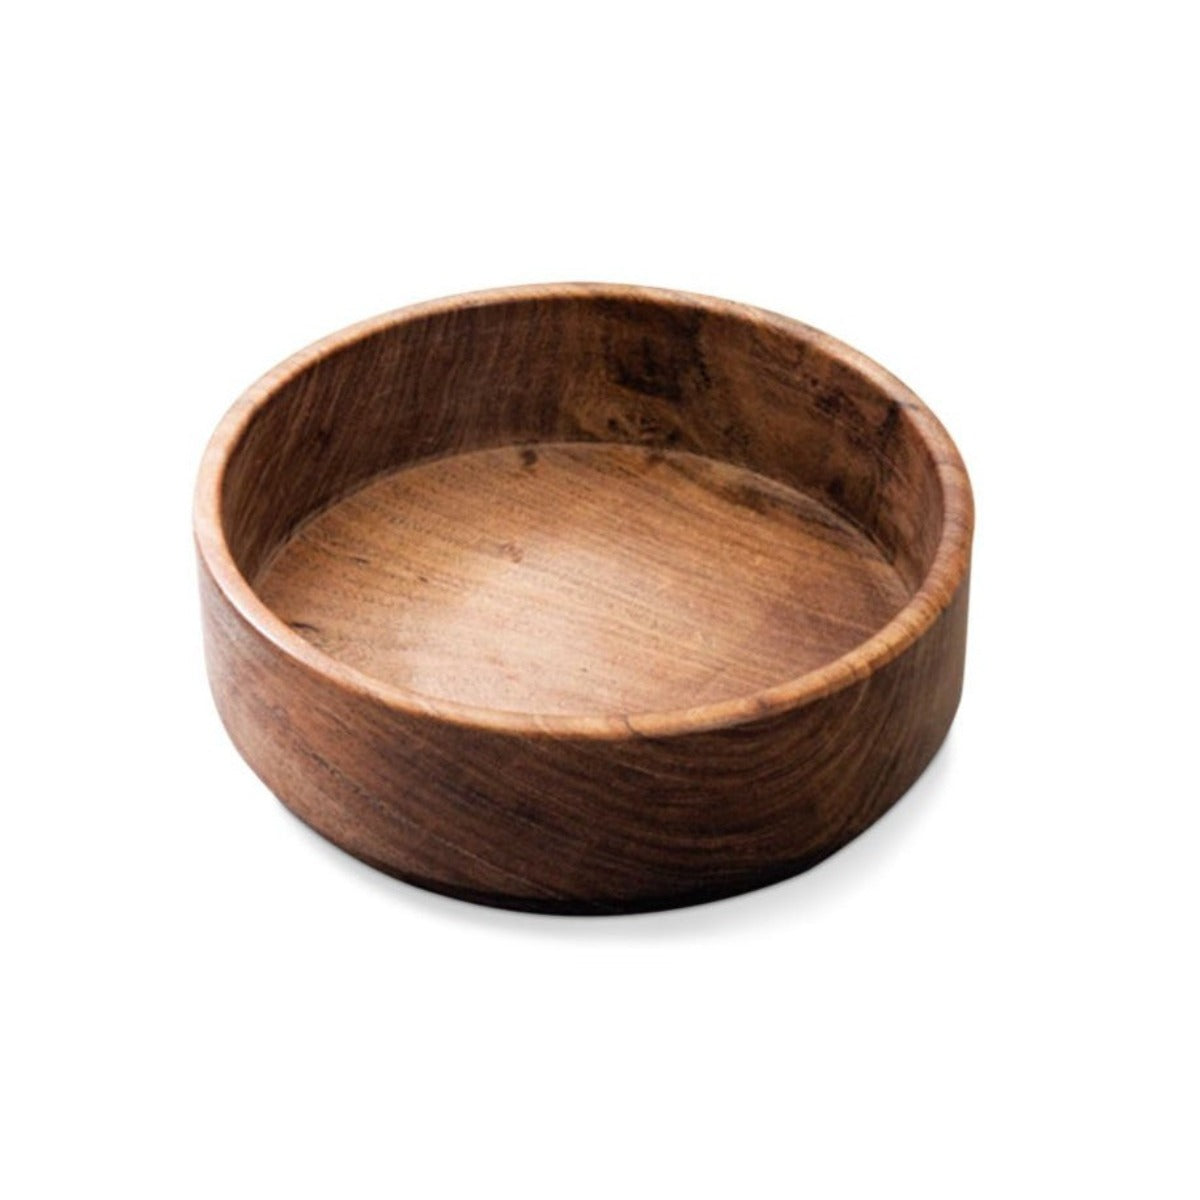 Mesquite Wooden Round Bowl